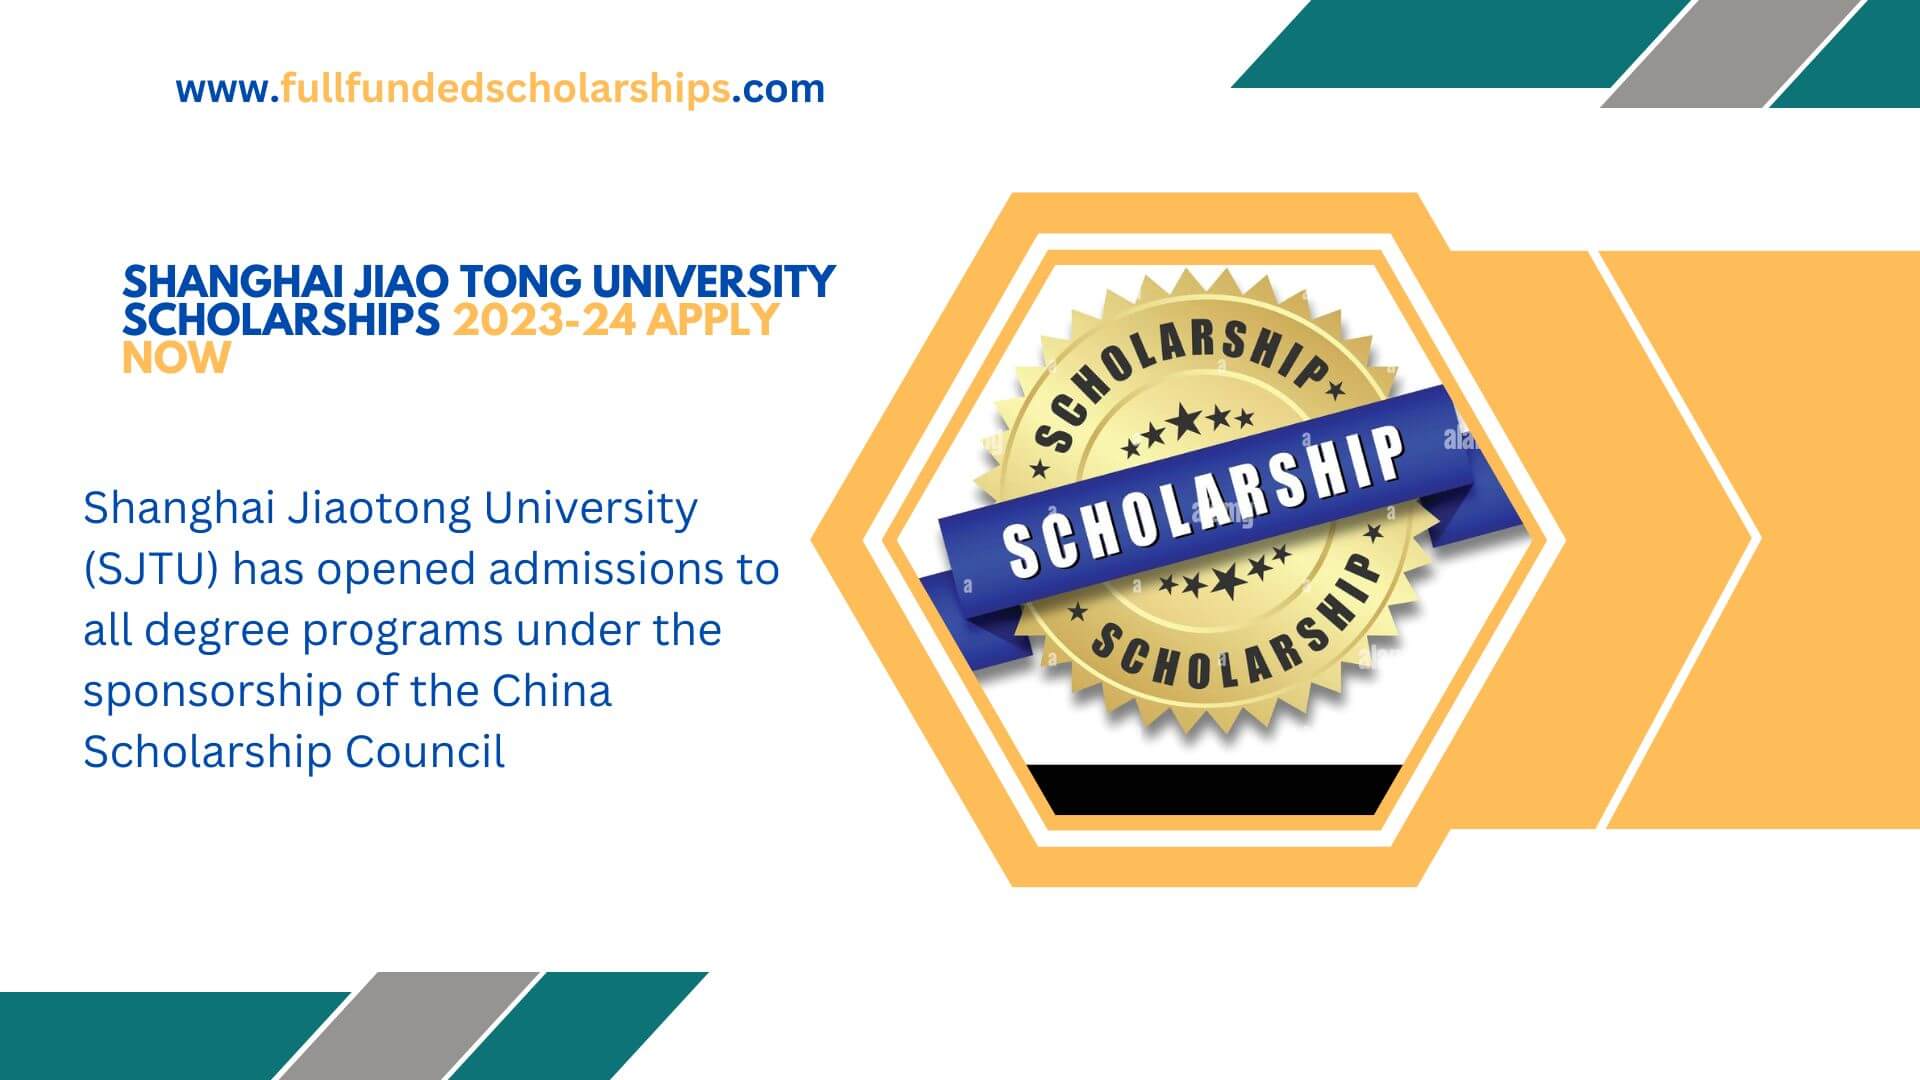 Shanghai Jiao Tong University Scholarships 2023-24 Apply Now